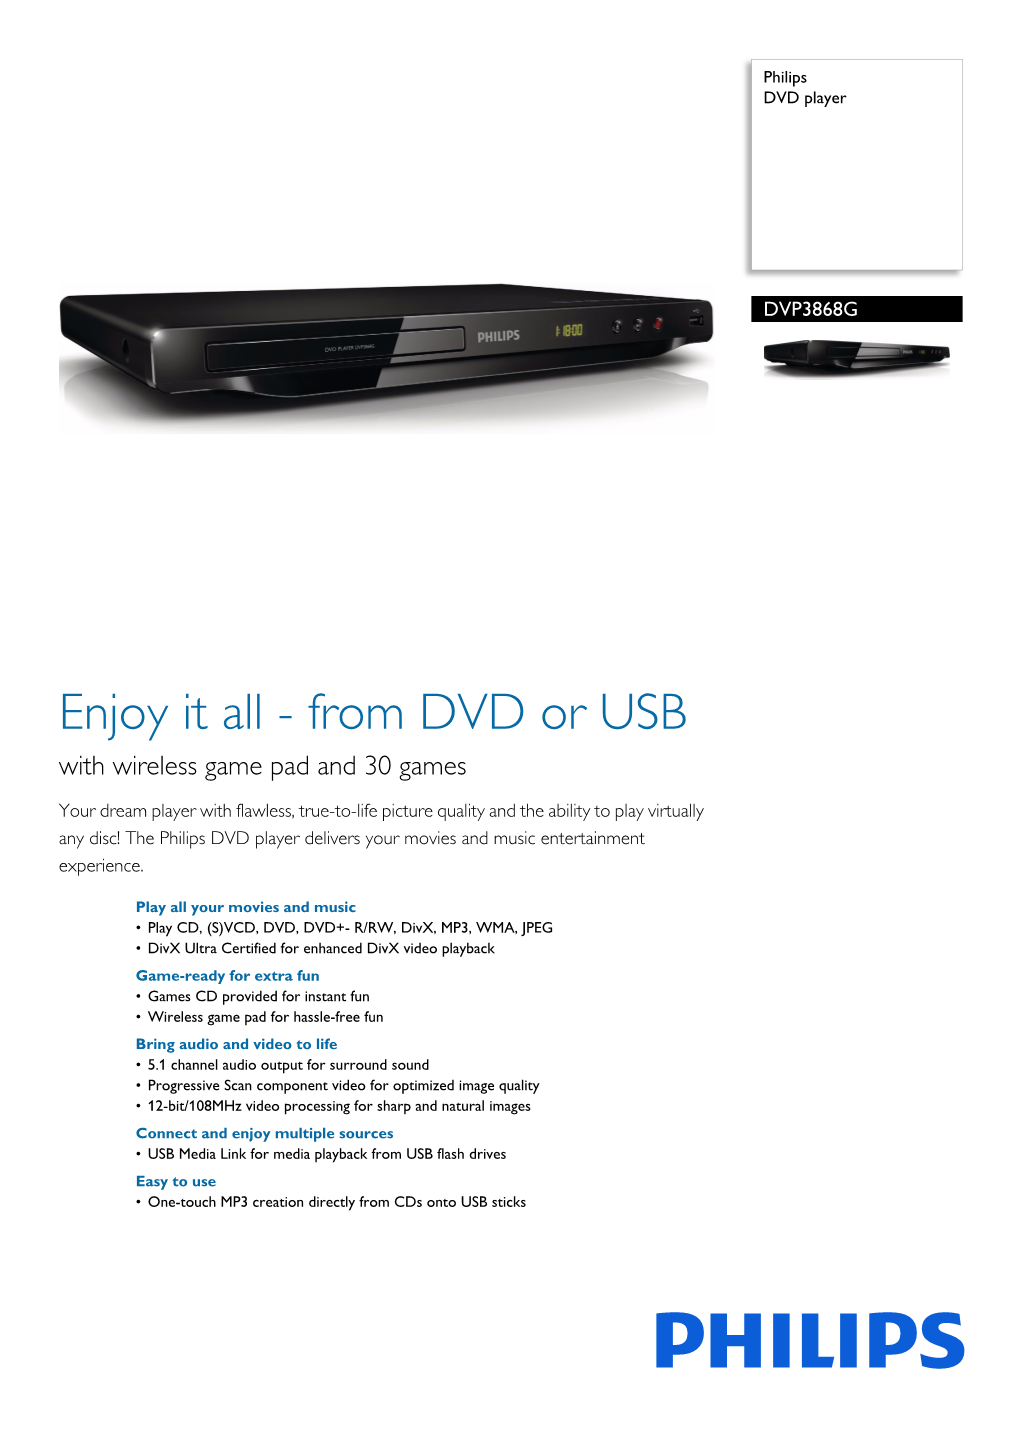 DVP3868G/94 Philips DVD Player